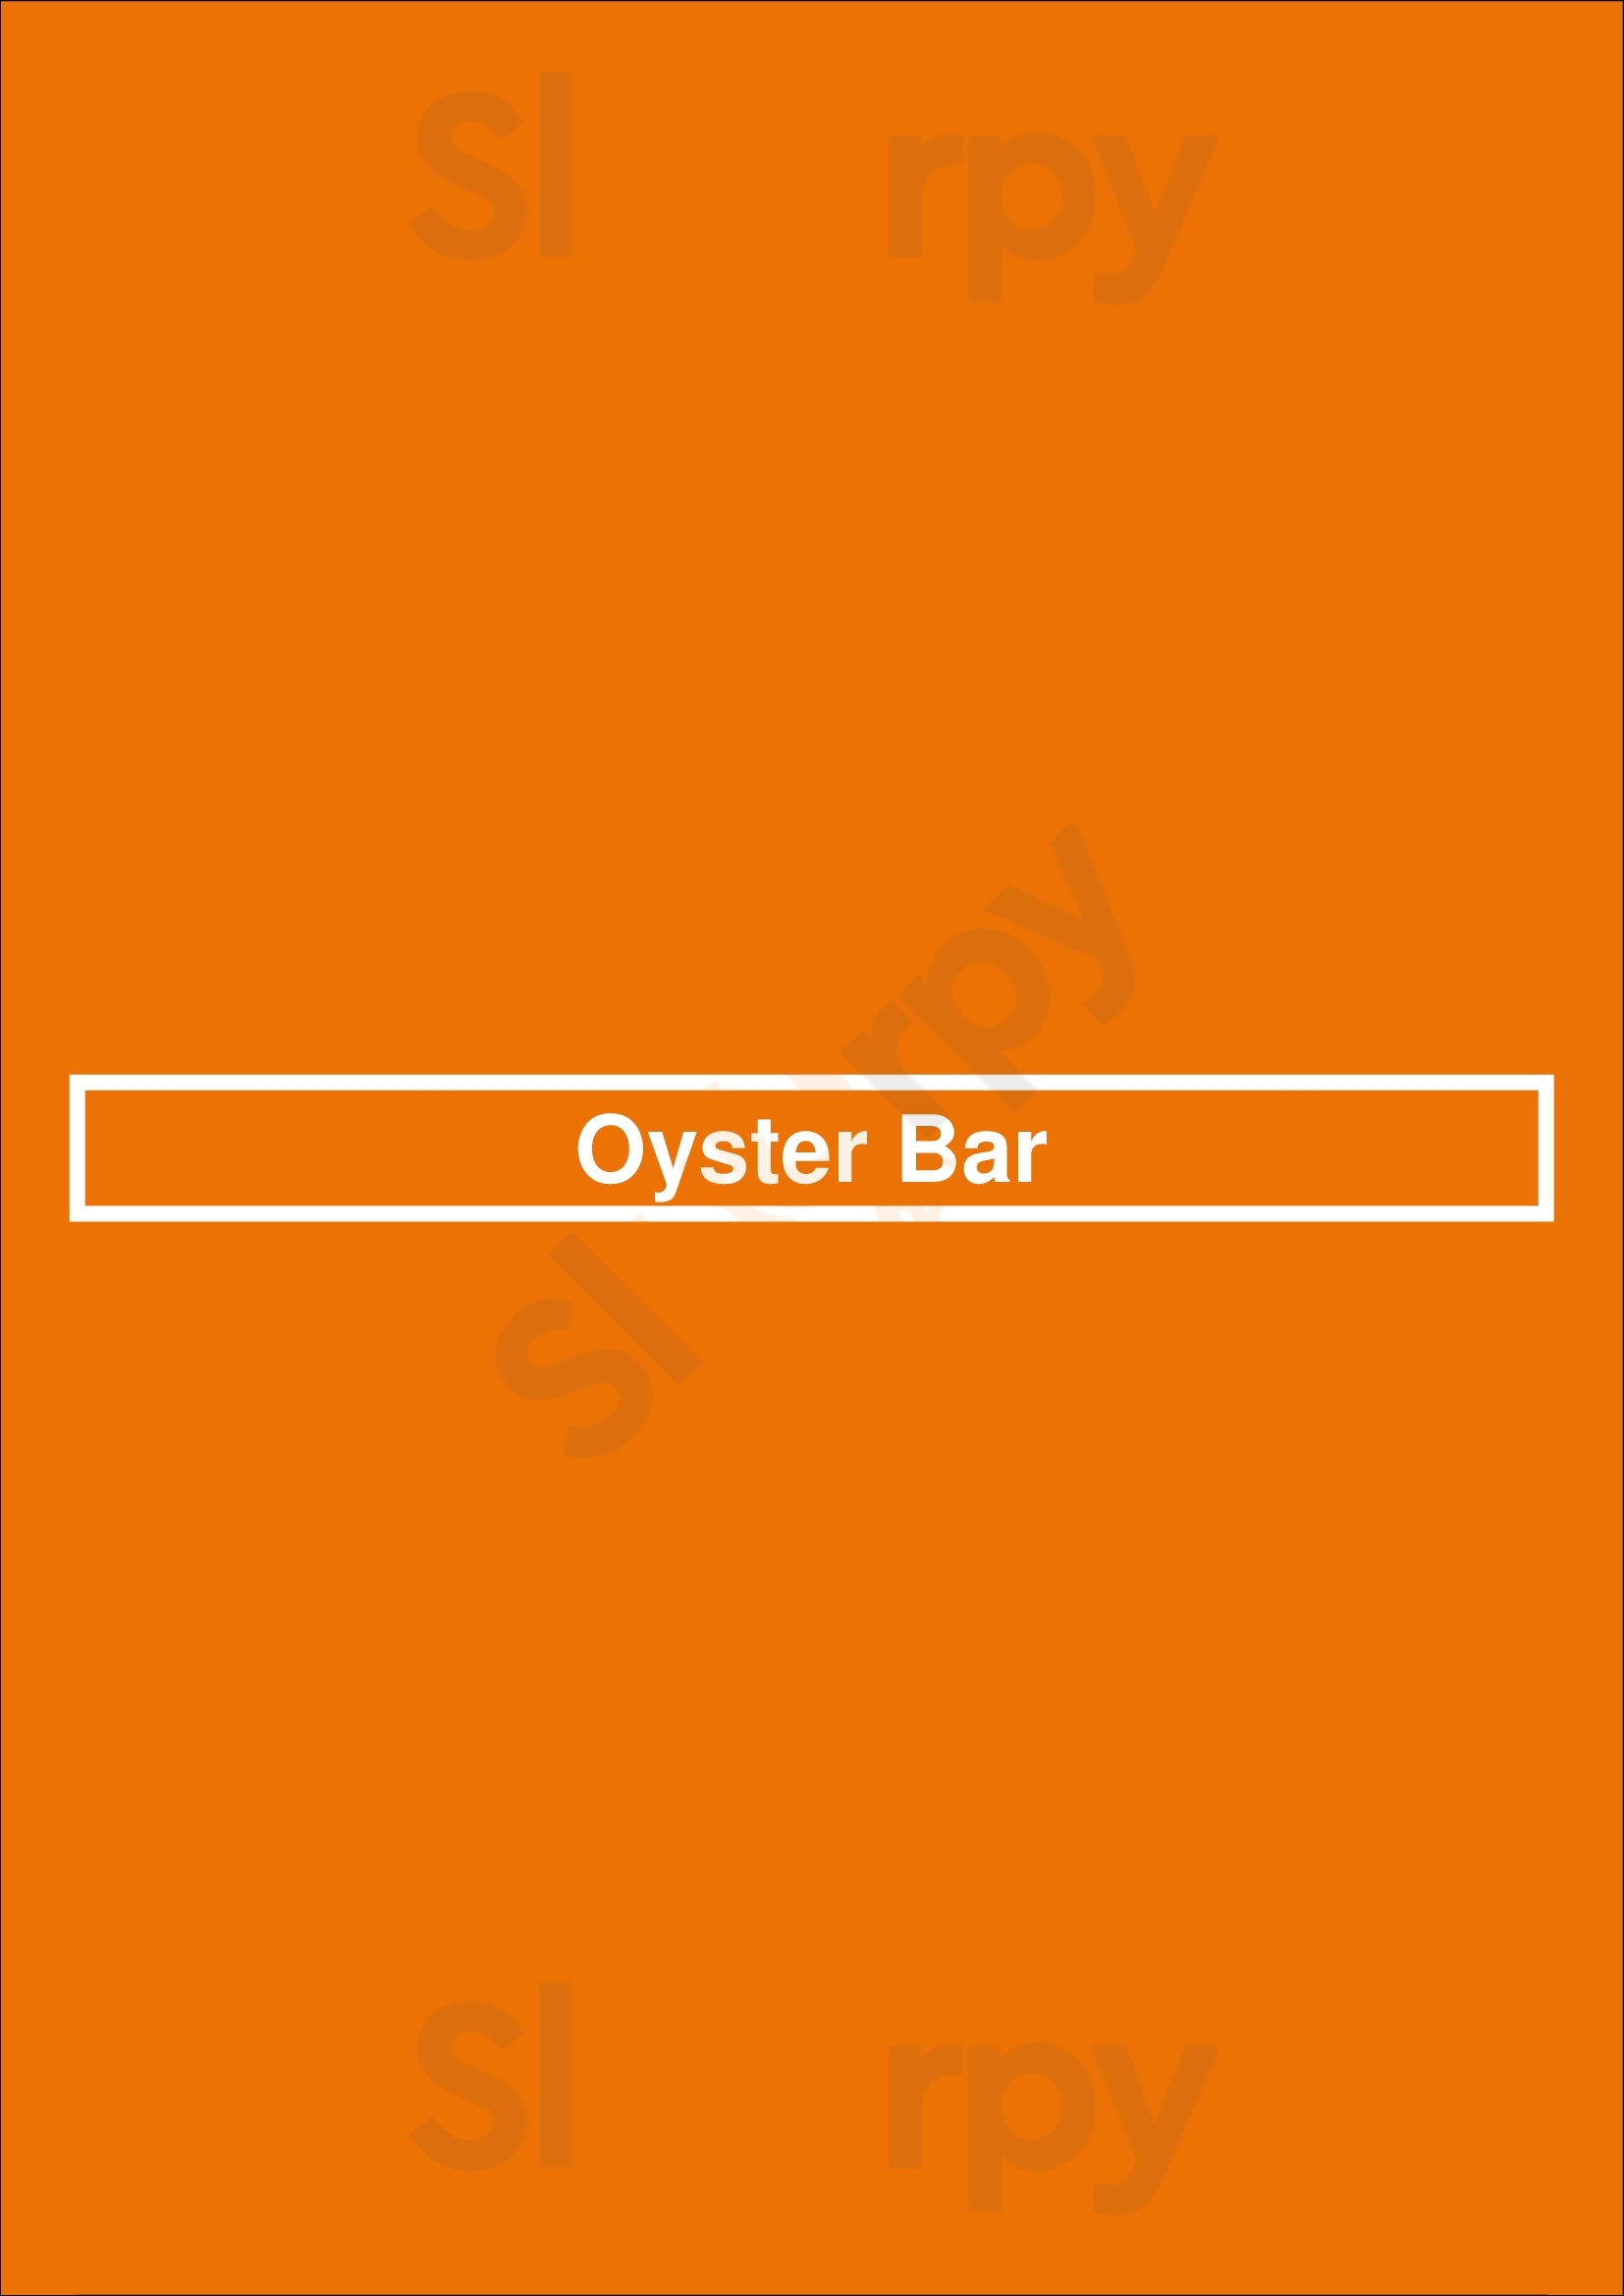 Oyster Bar Sparks Menu - 1